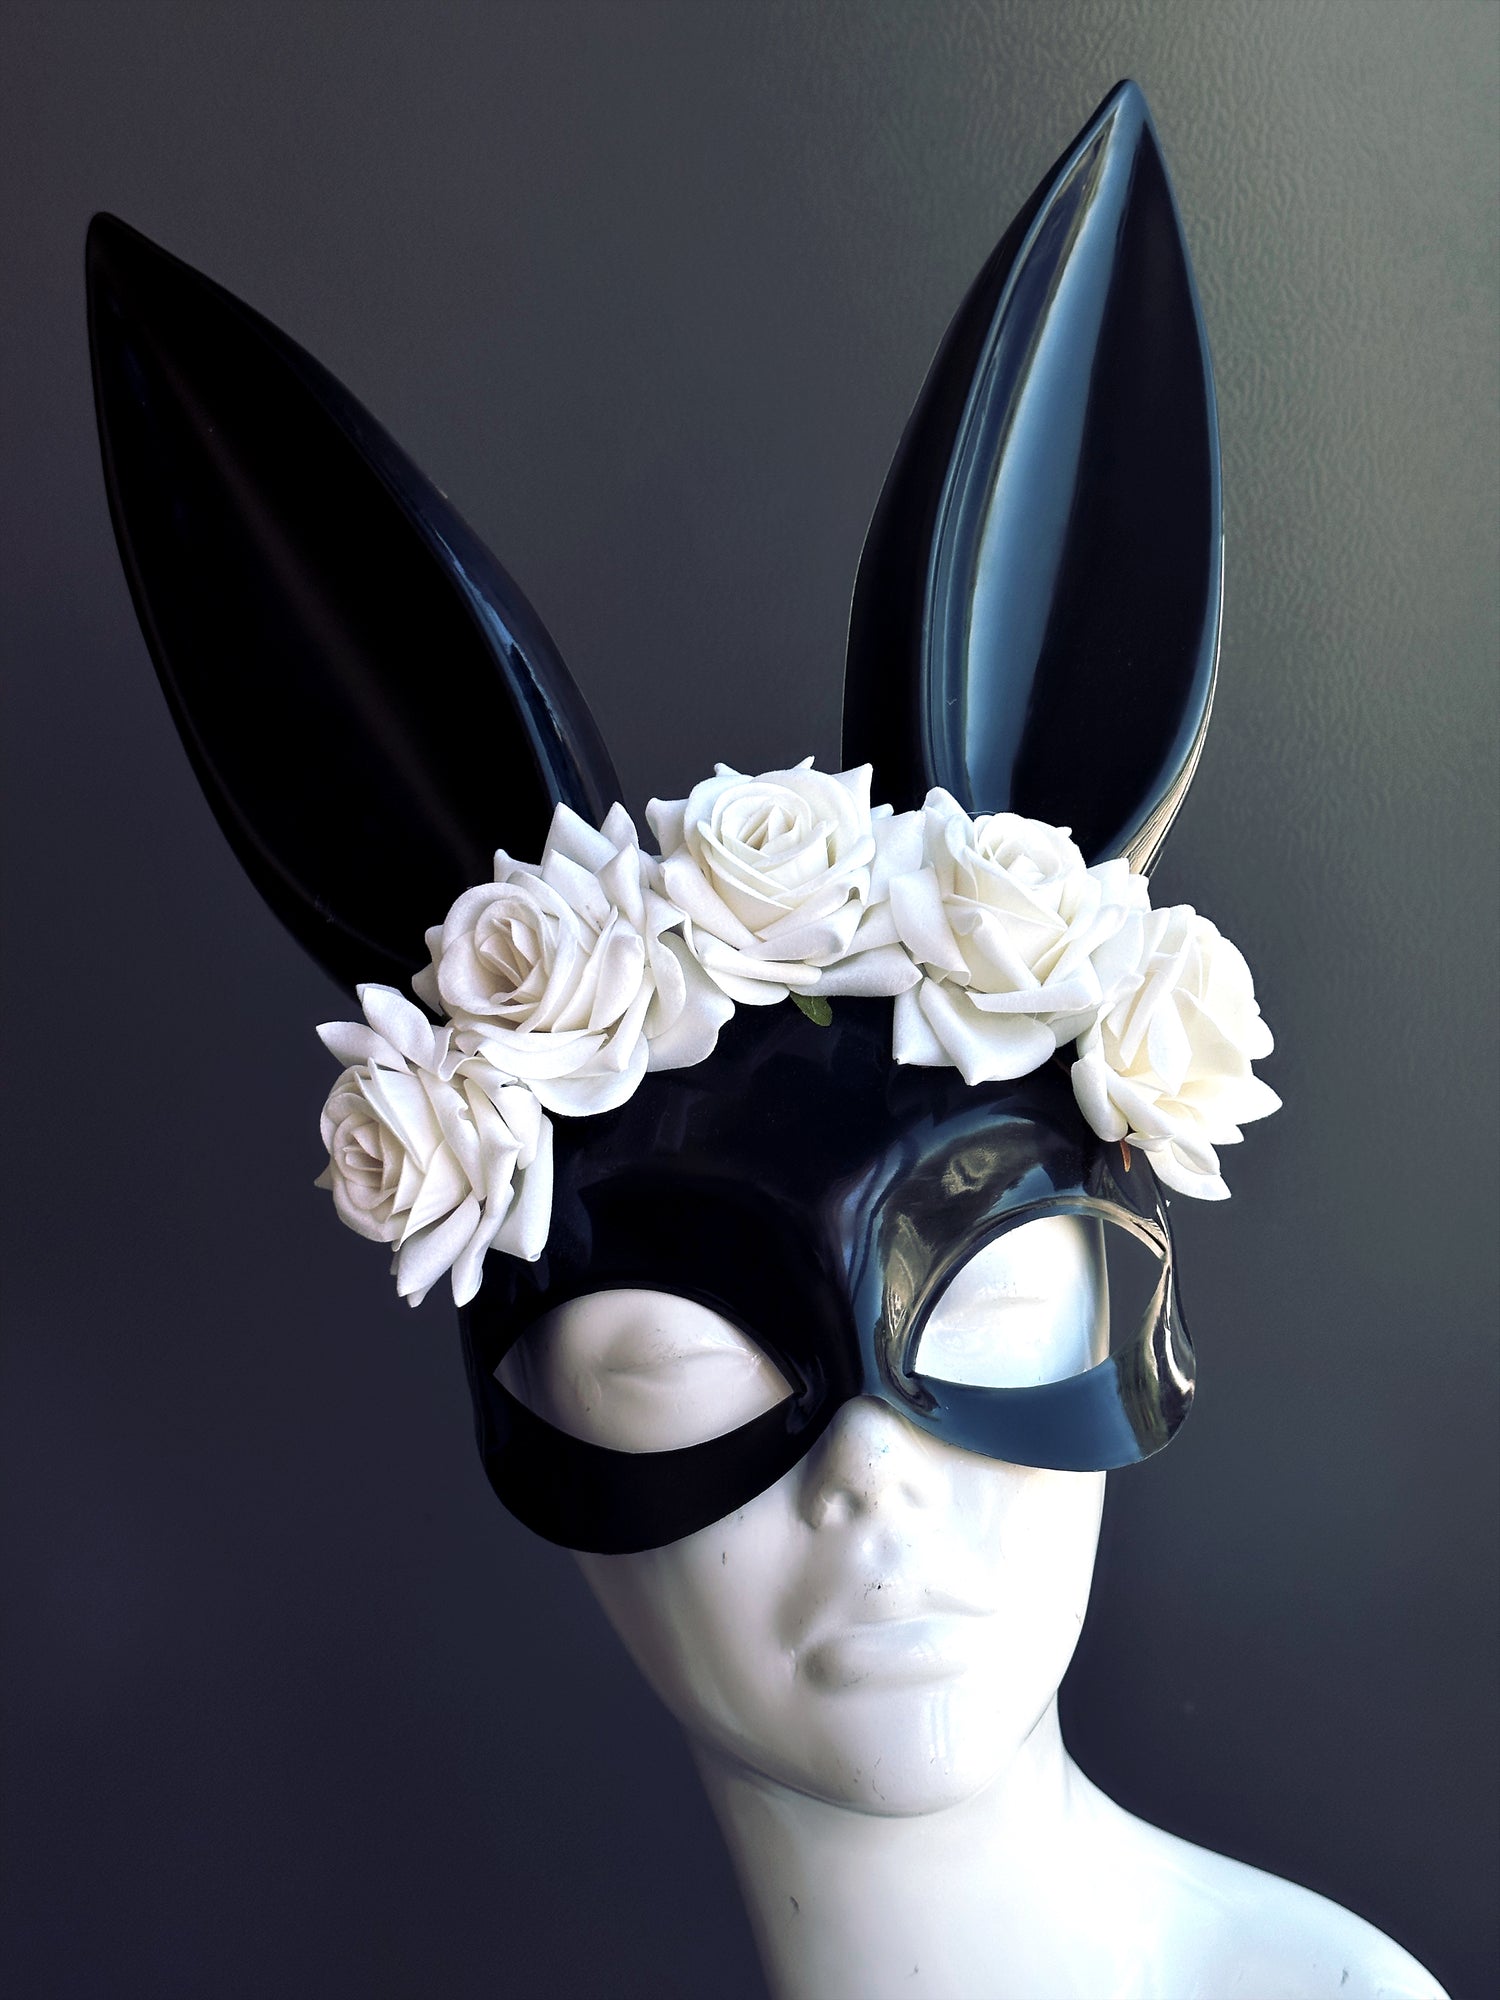 Bunny Mask / White Roses